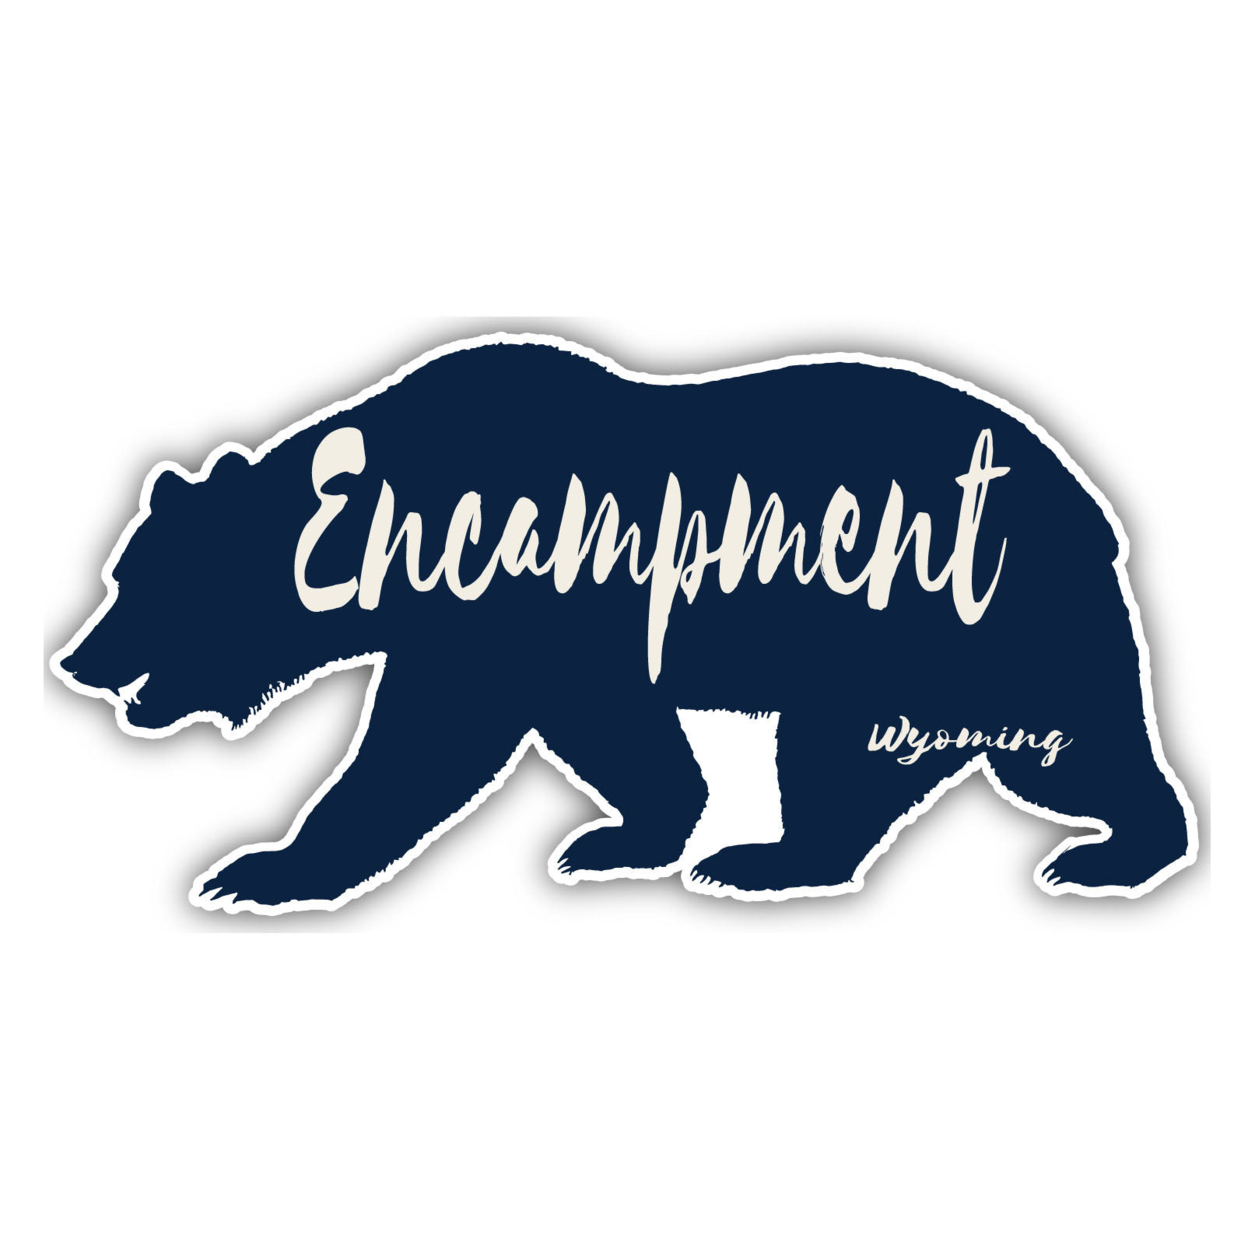 Encampment Wyoming Souvenir Decorative Stickers (Choose Theme And Size) - Single Unit, 12-Inch, Bear